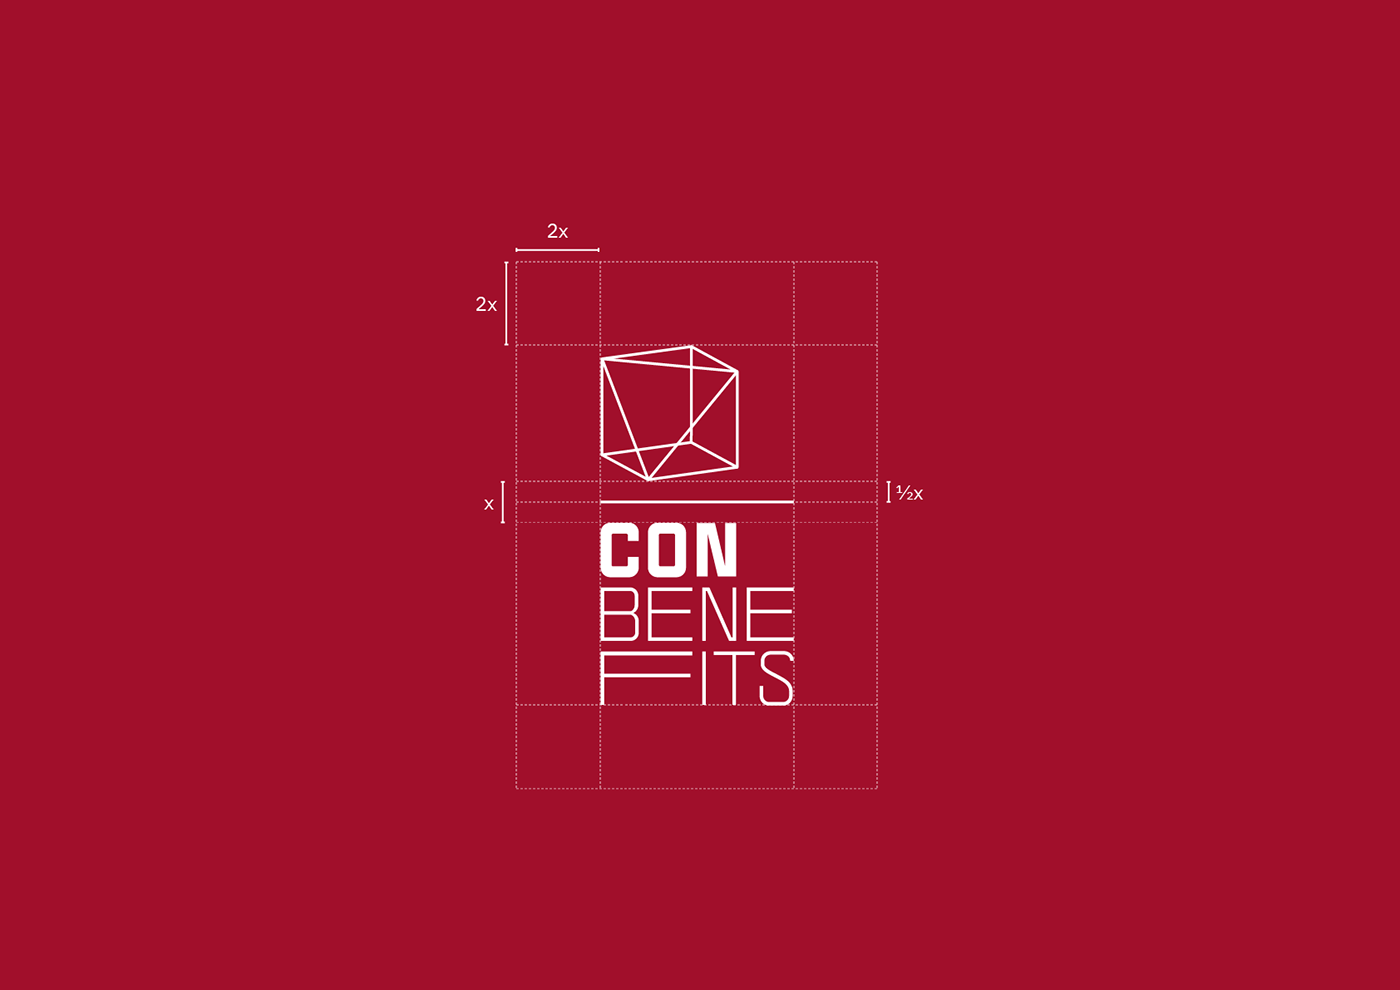 barcelona beneficis conbenefits confide disseny empresa Flexibilität marca